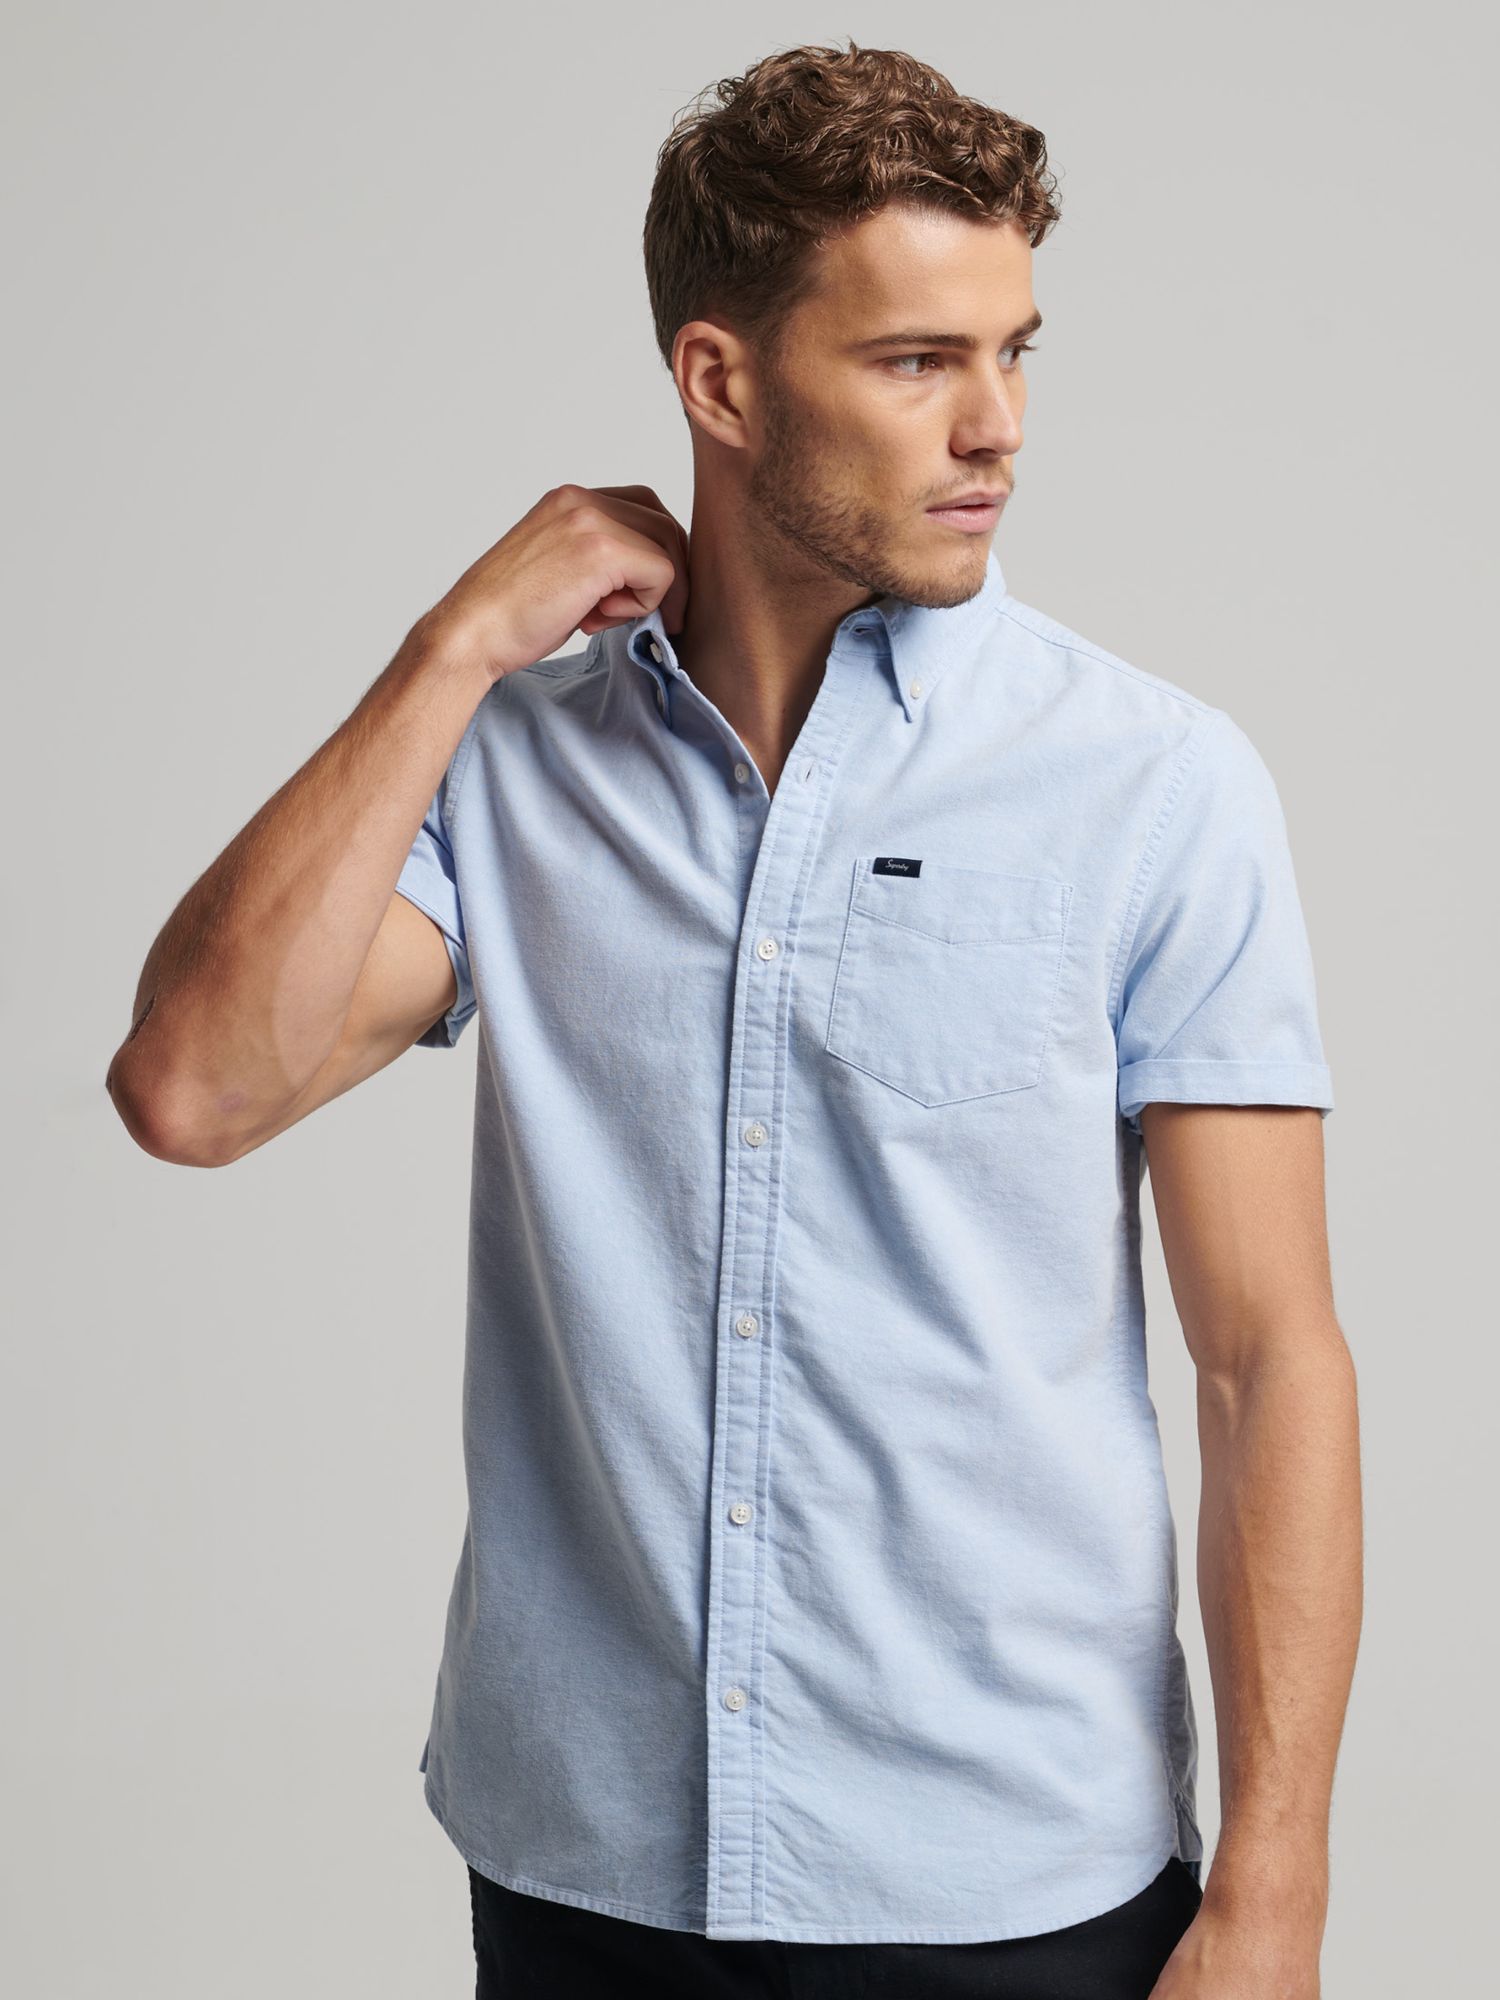 Men's Short Sleeve Shirts | John Lewis & Partners